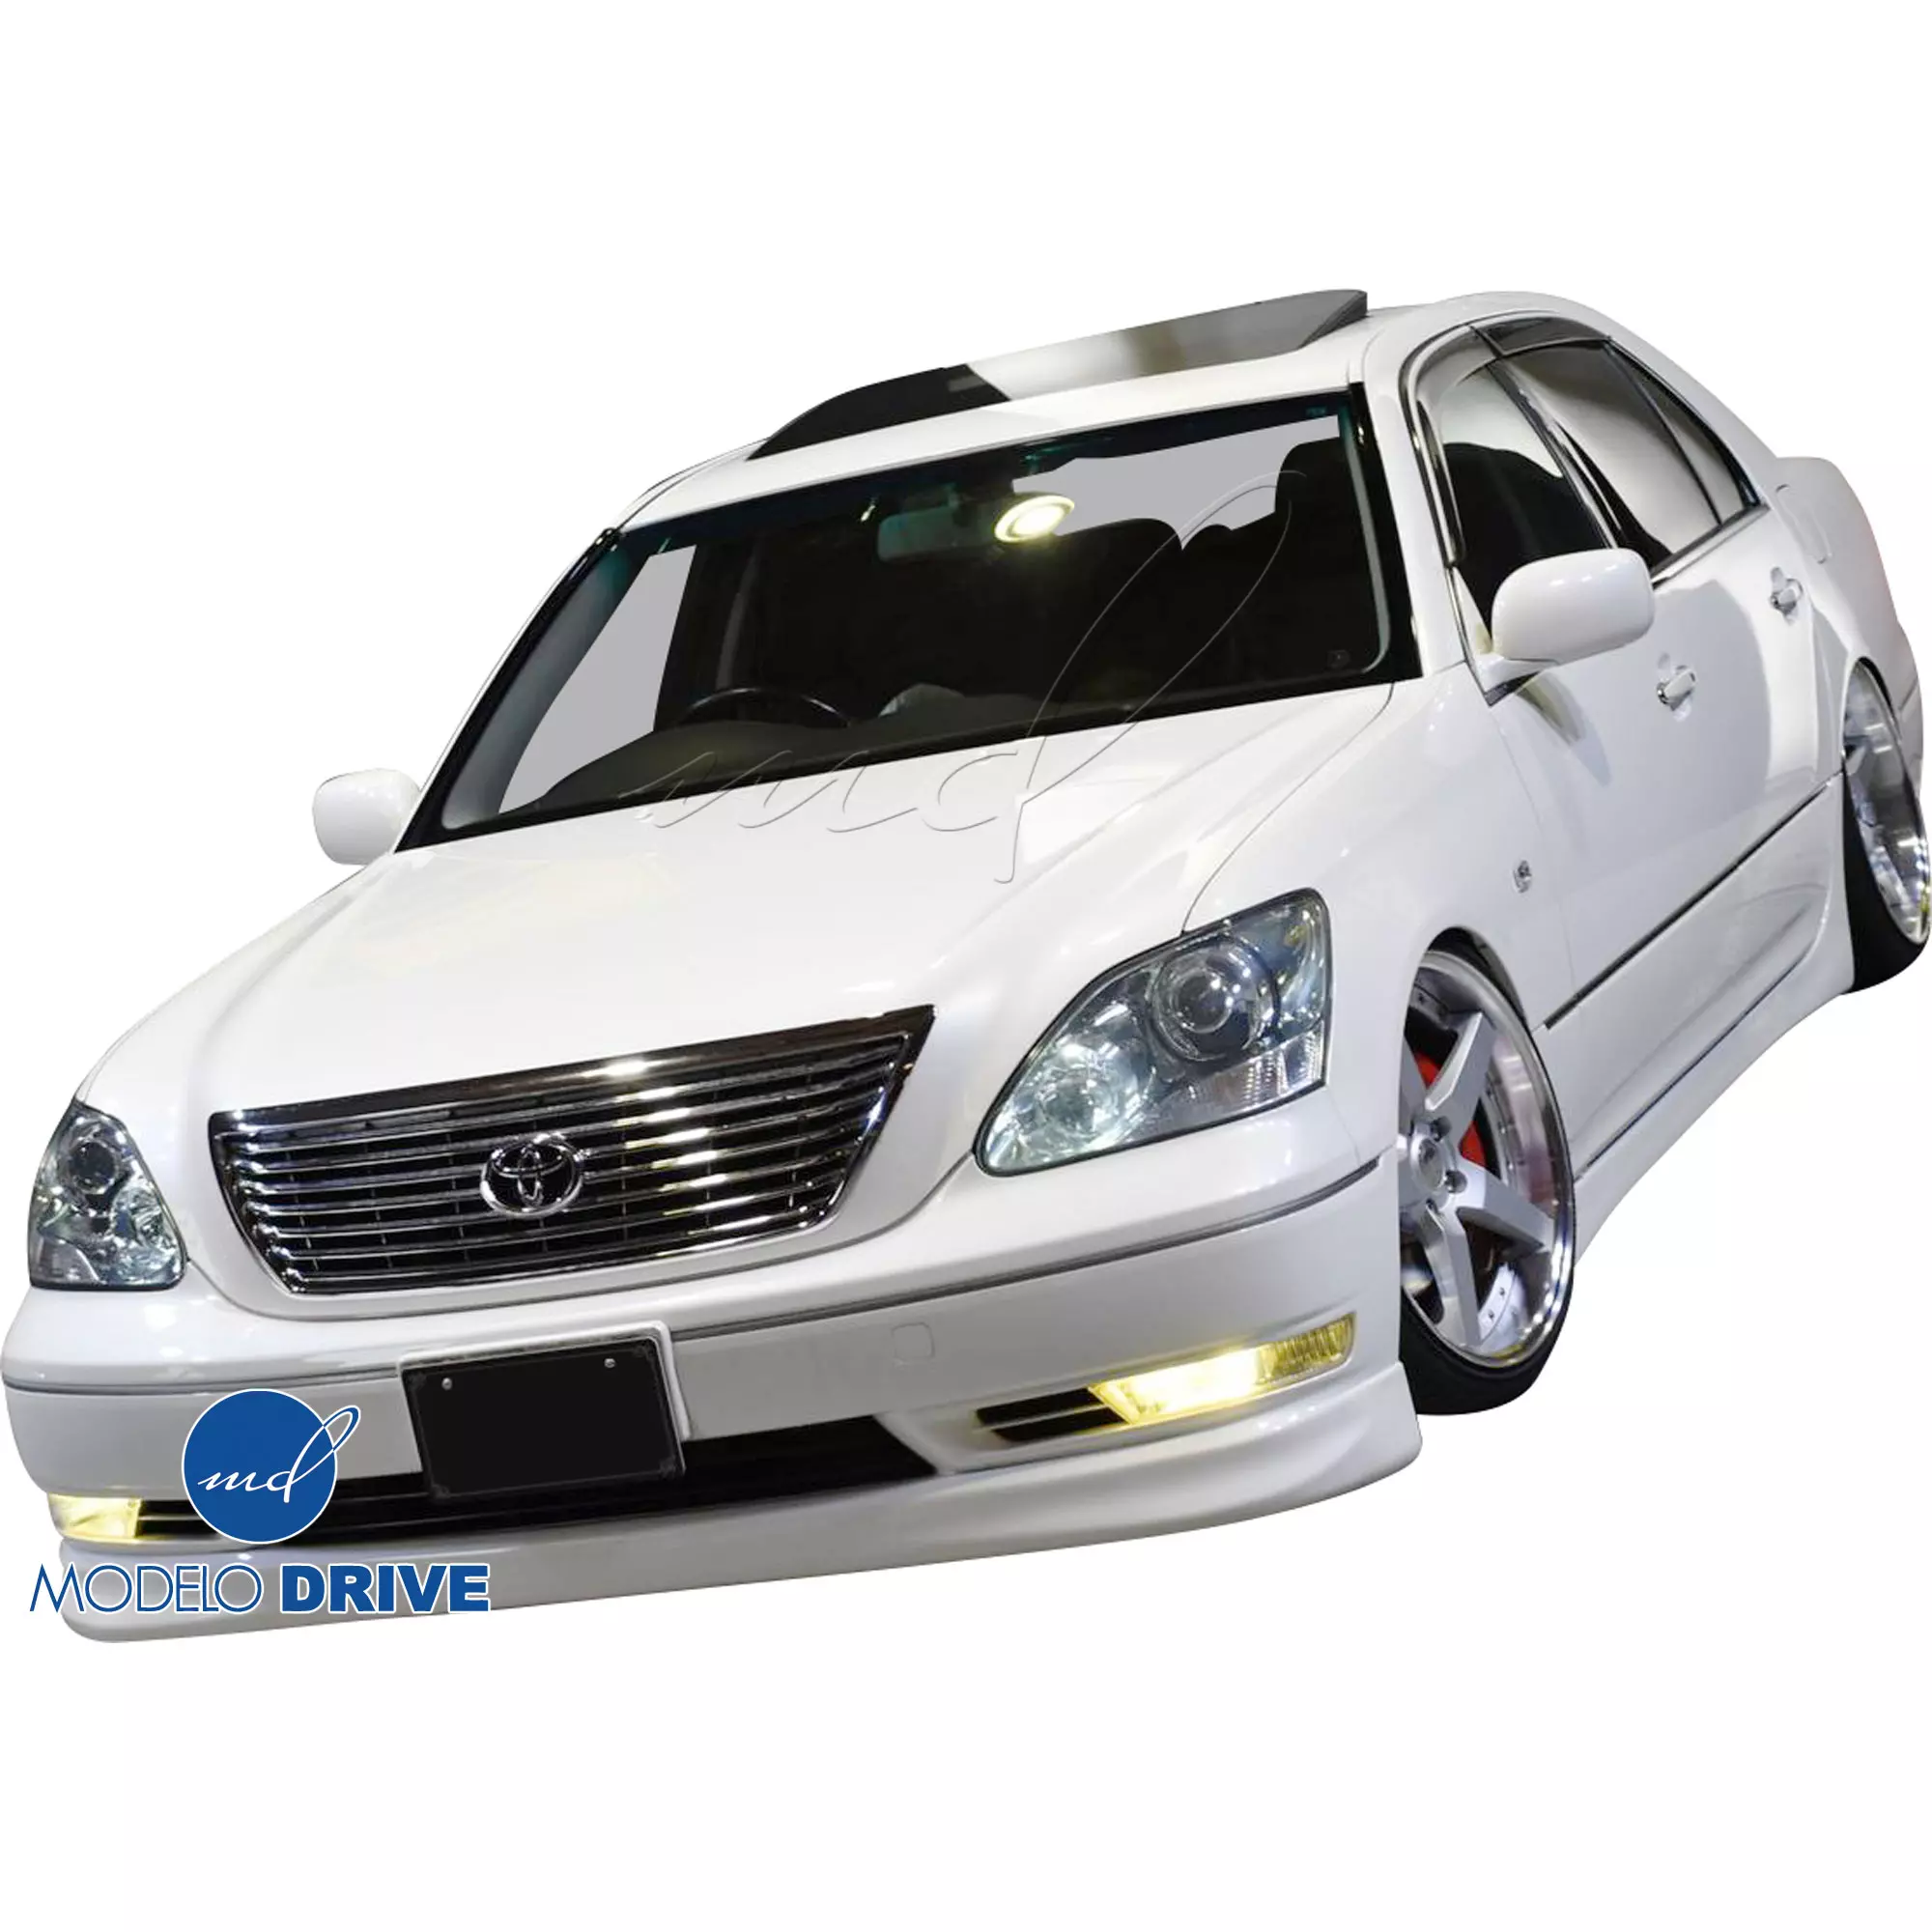 ModeloDrive FRP ARTI Body Kit 4pc (short wheelbase) > Lexus LS Series LS430 UCF31 2004-2006 - Image 12